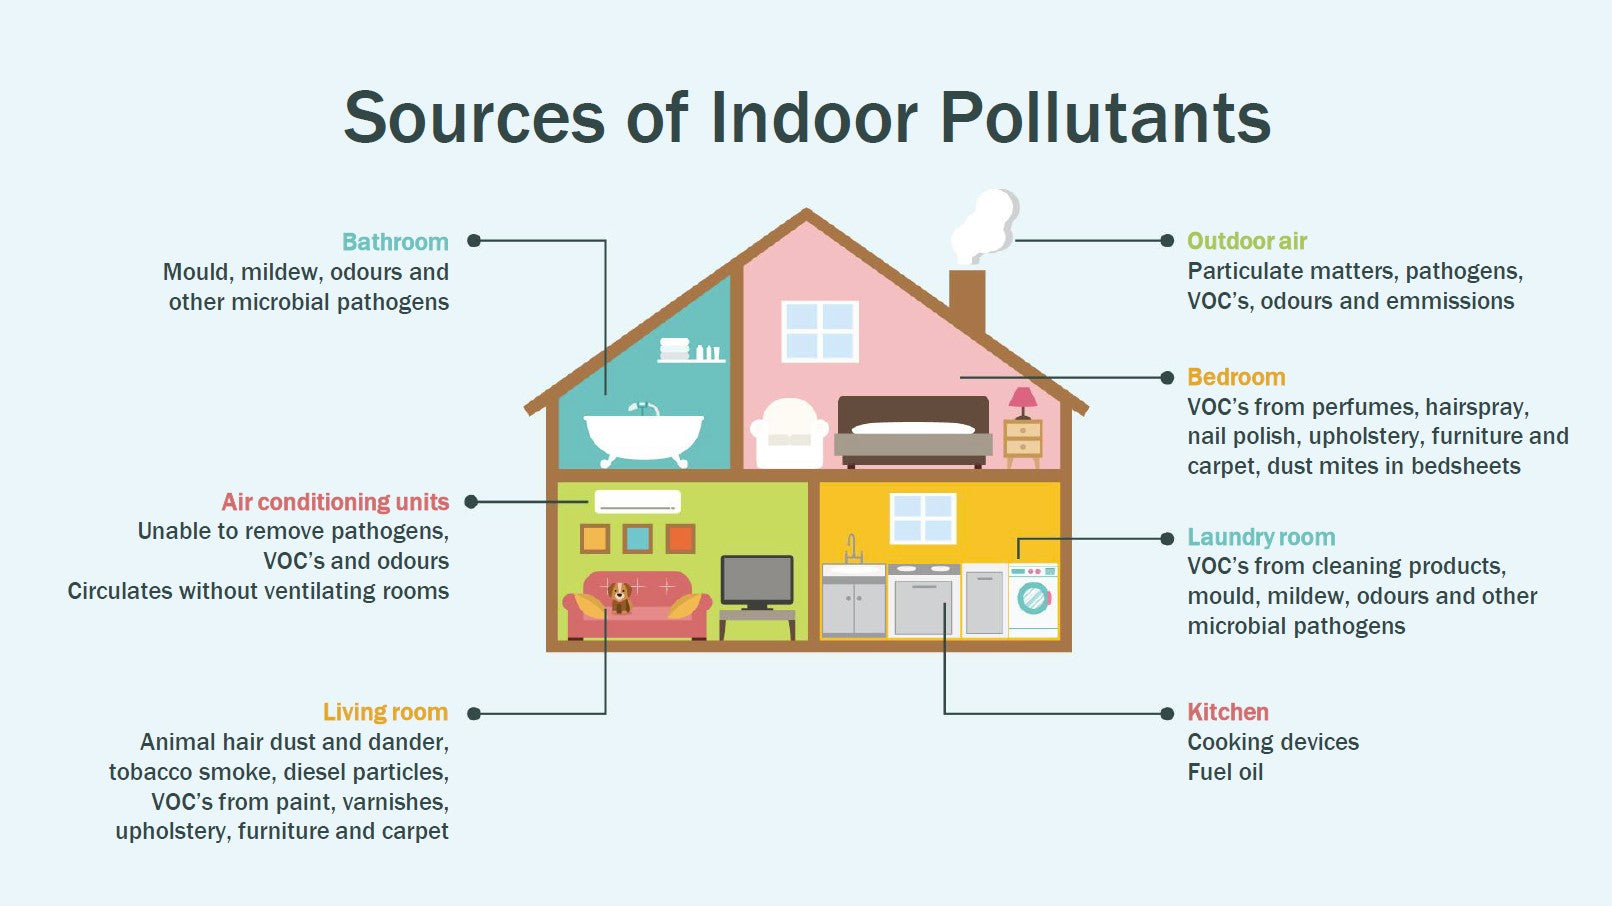 Sources of indoor air pollutants